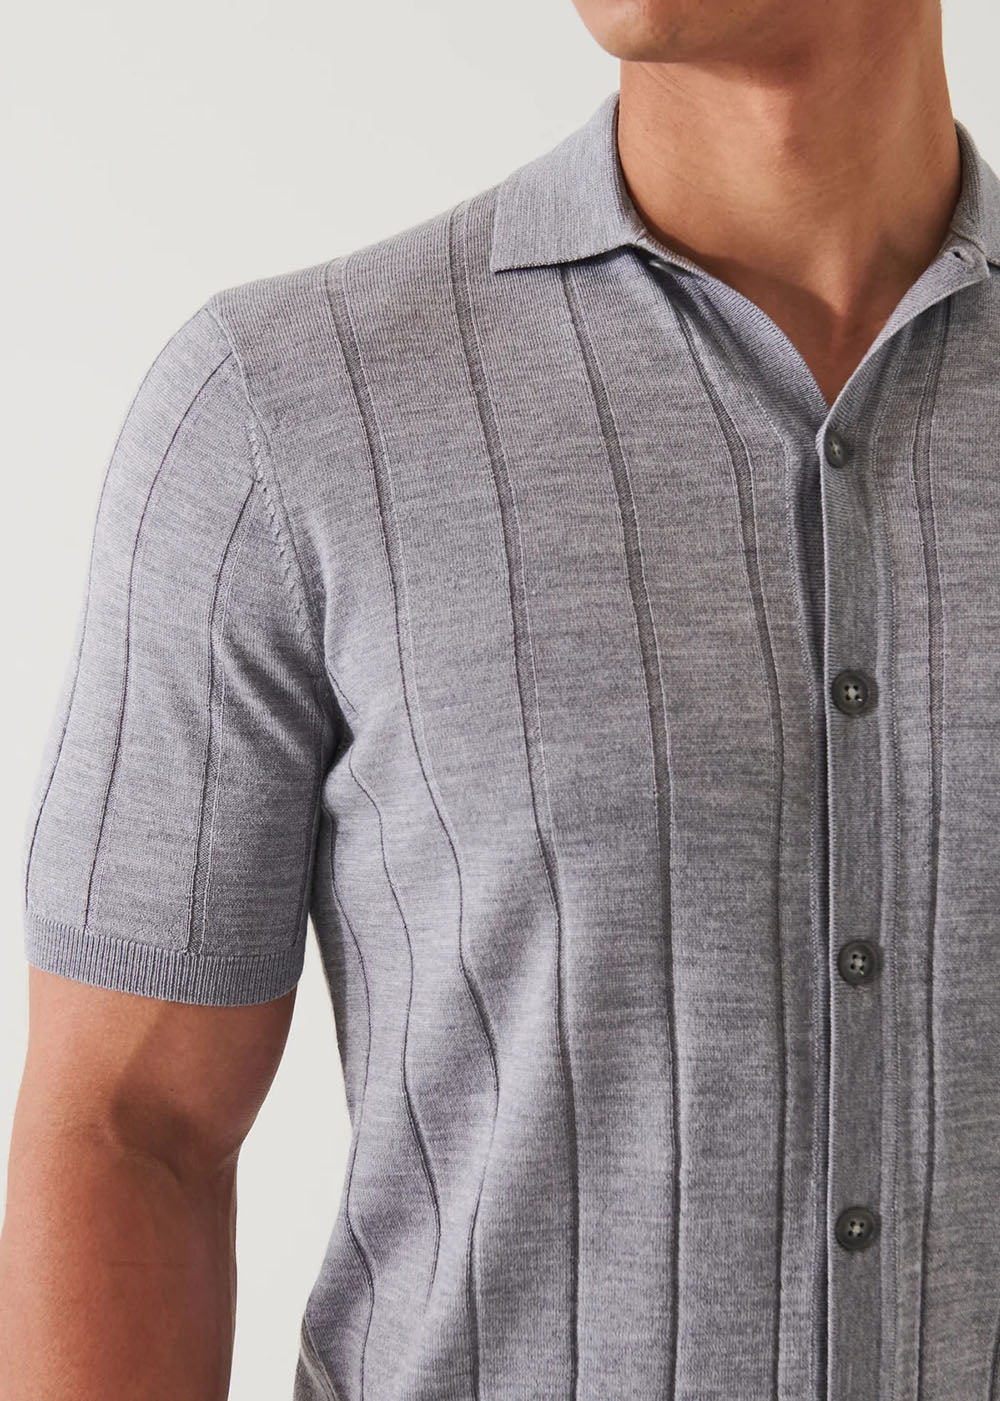 Merino Wool Silk Blend Knit Button Up Shirt - Ghost - Patrick Assaraf - Danali - P144B02X